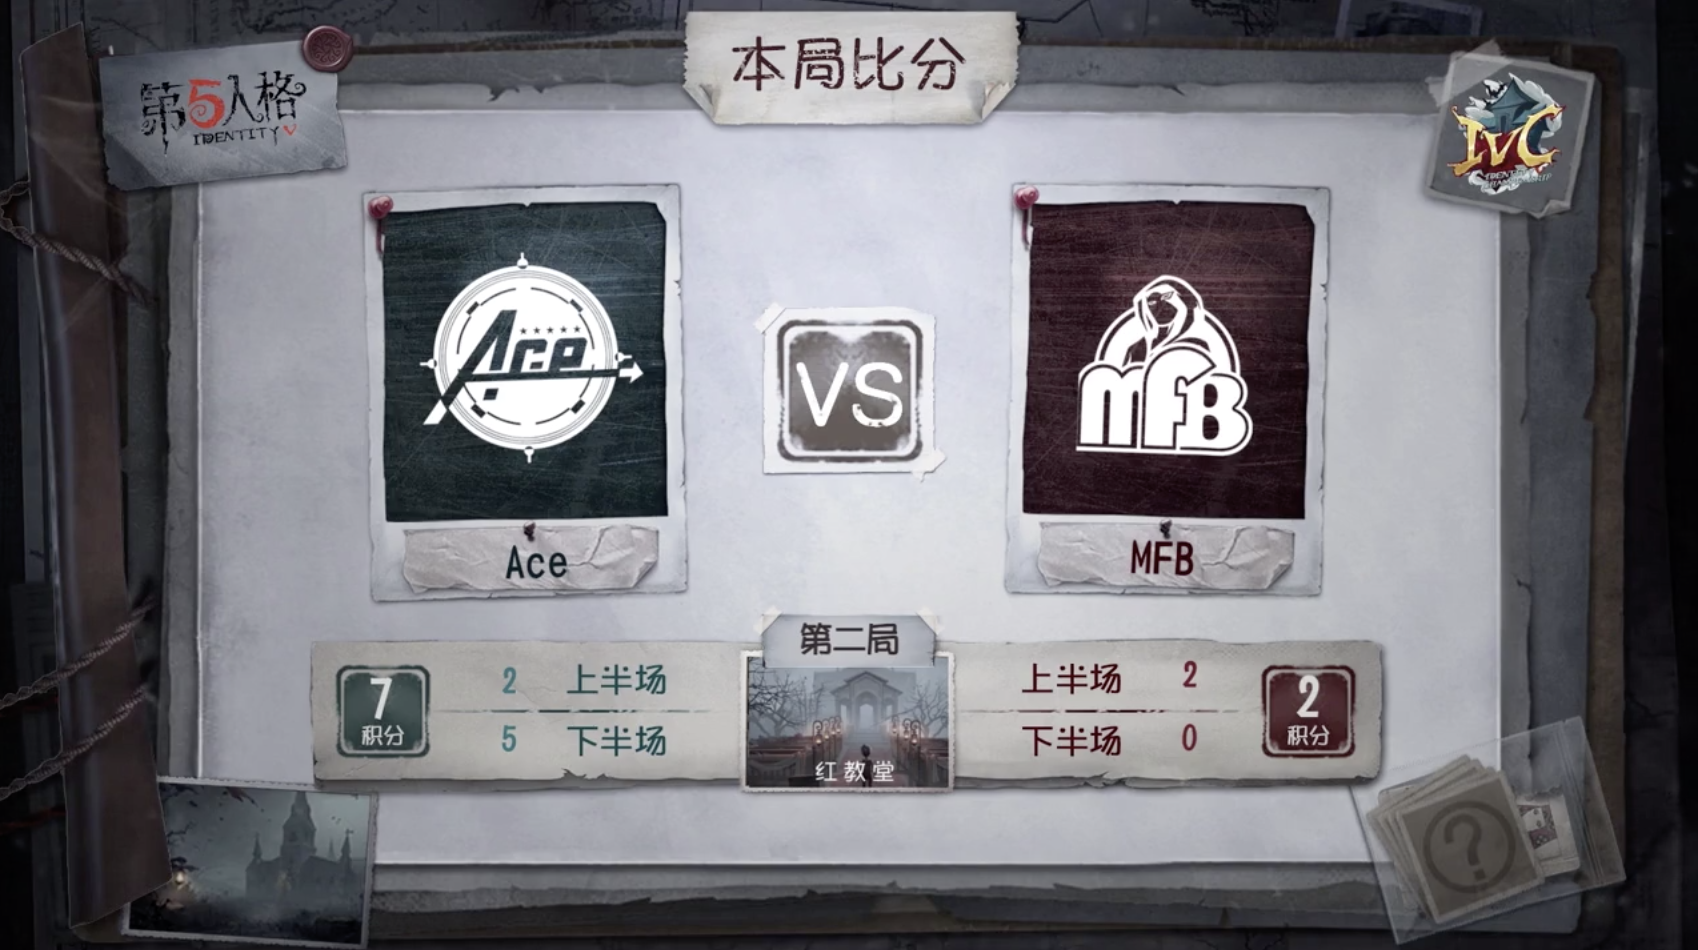 10月19日 Ace vs MFB小组赛BO3第二局